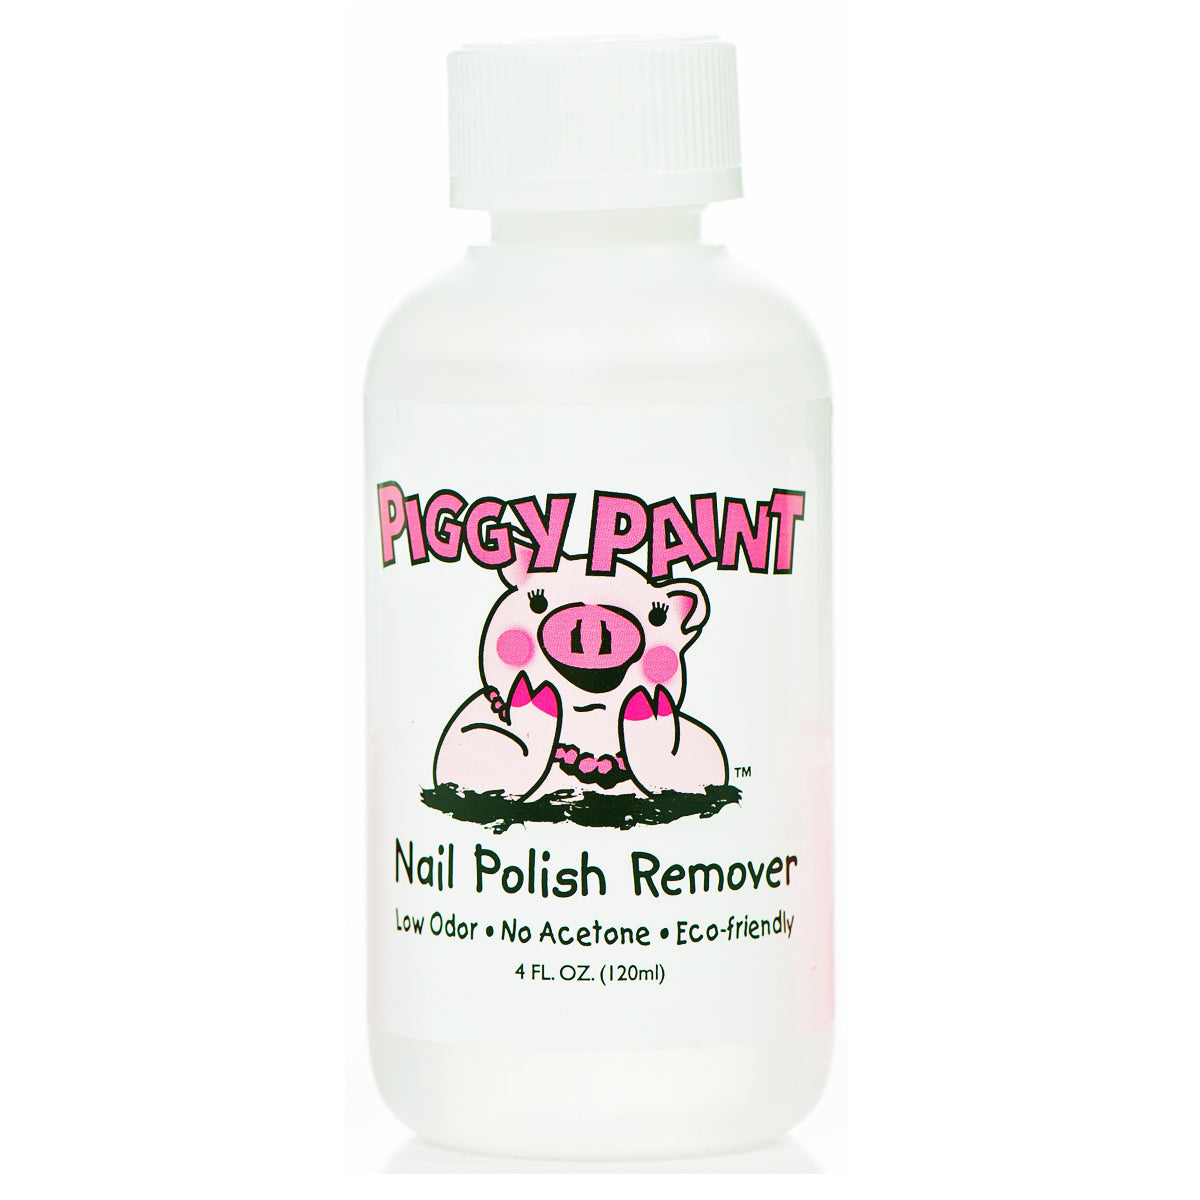 Piggy Paint Eco-Friendly Nail Polish Remover